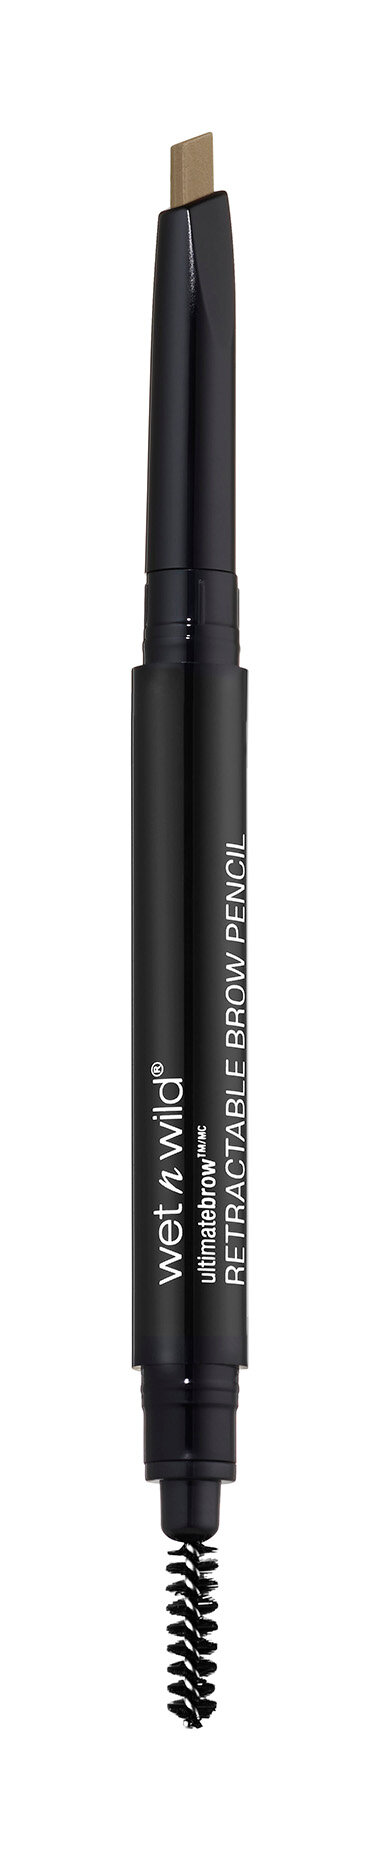 WETnWILD Ultimate Brow Retractable Pencil Карандаш для бровей автоматический, 1 г, E625a Taupe